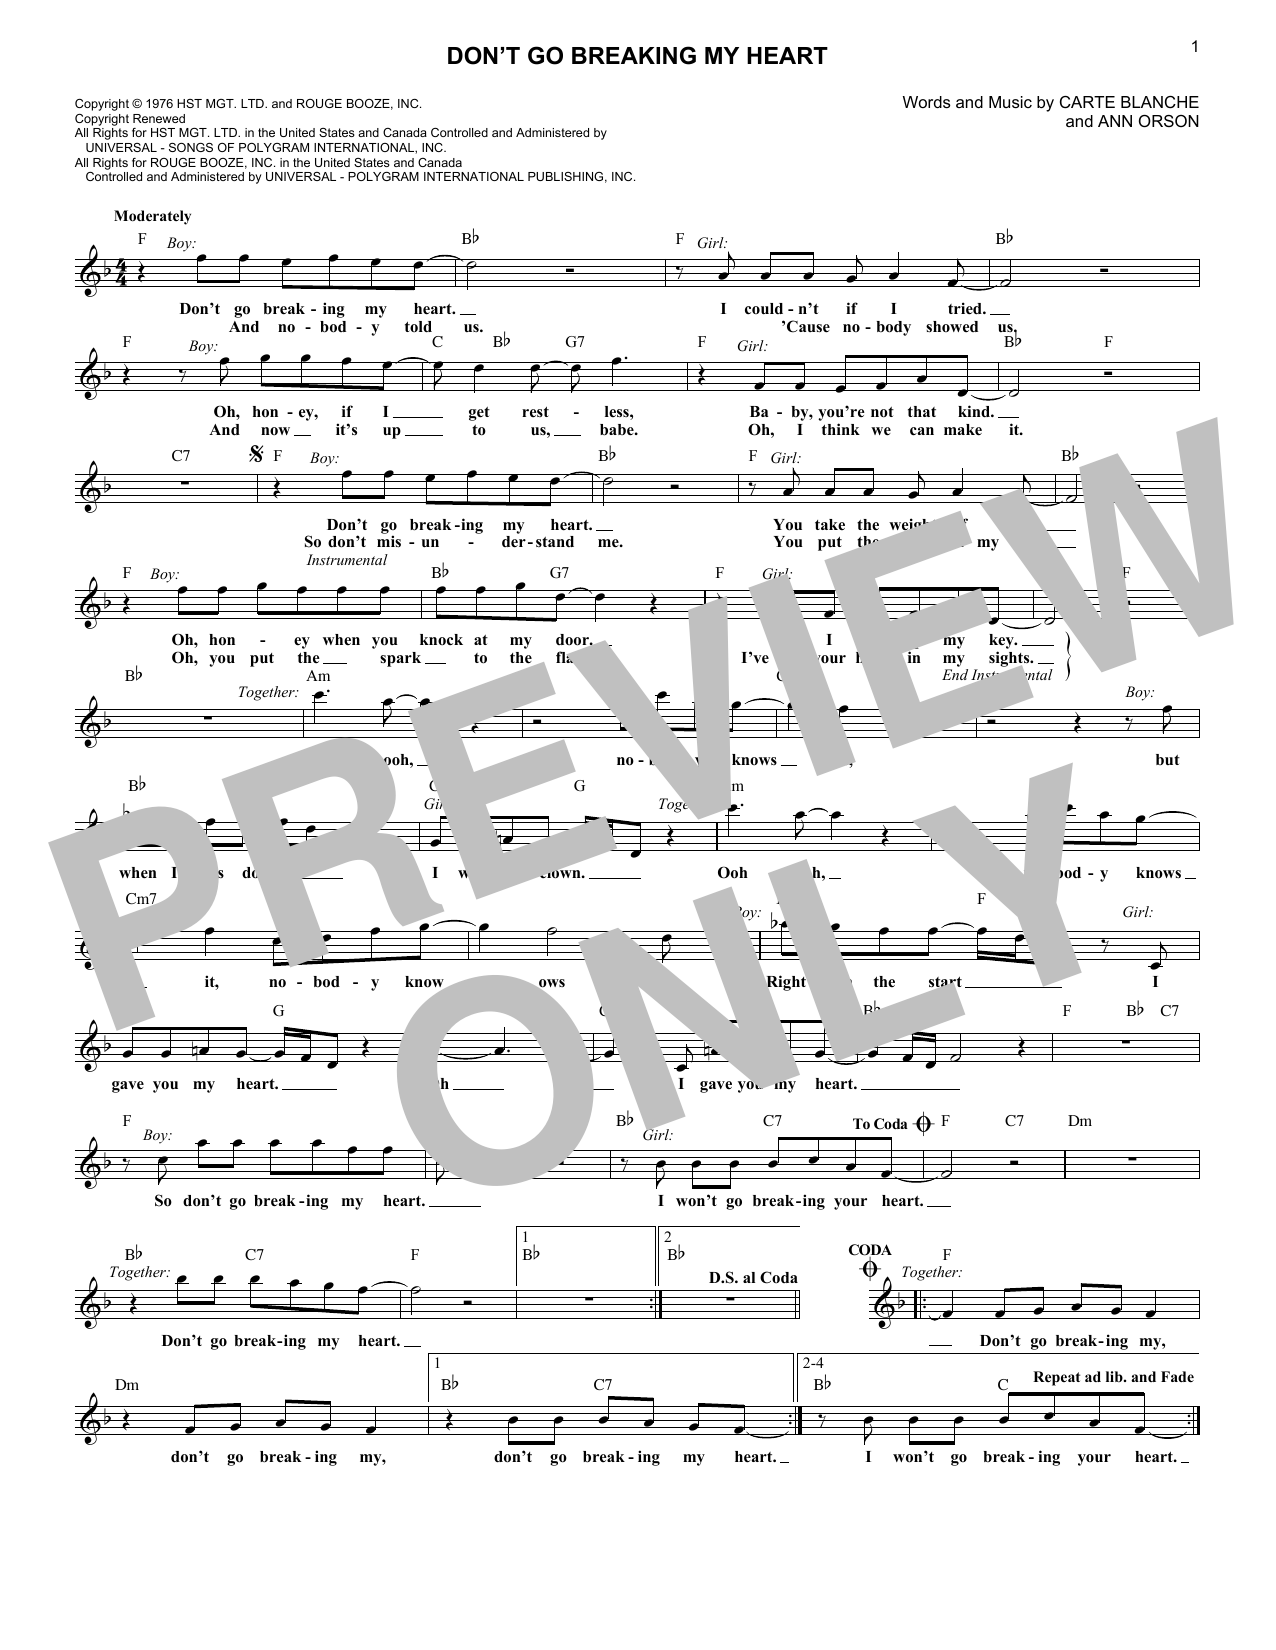 Elton John & Kiki Dee Don't Go Breaking My Heart Sheet Music Notes & Chords for Guitar Tab - Download or Print PDF